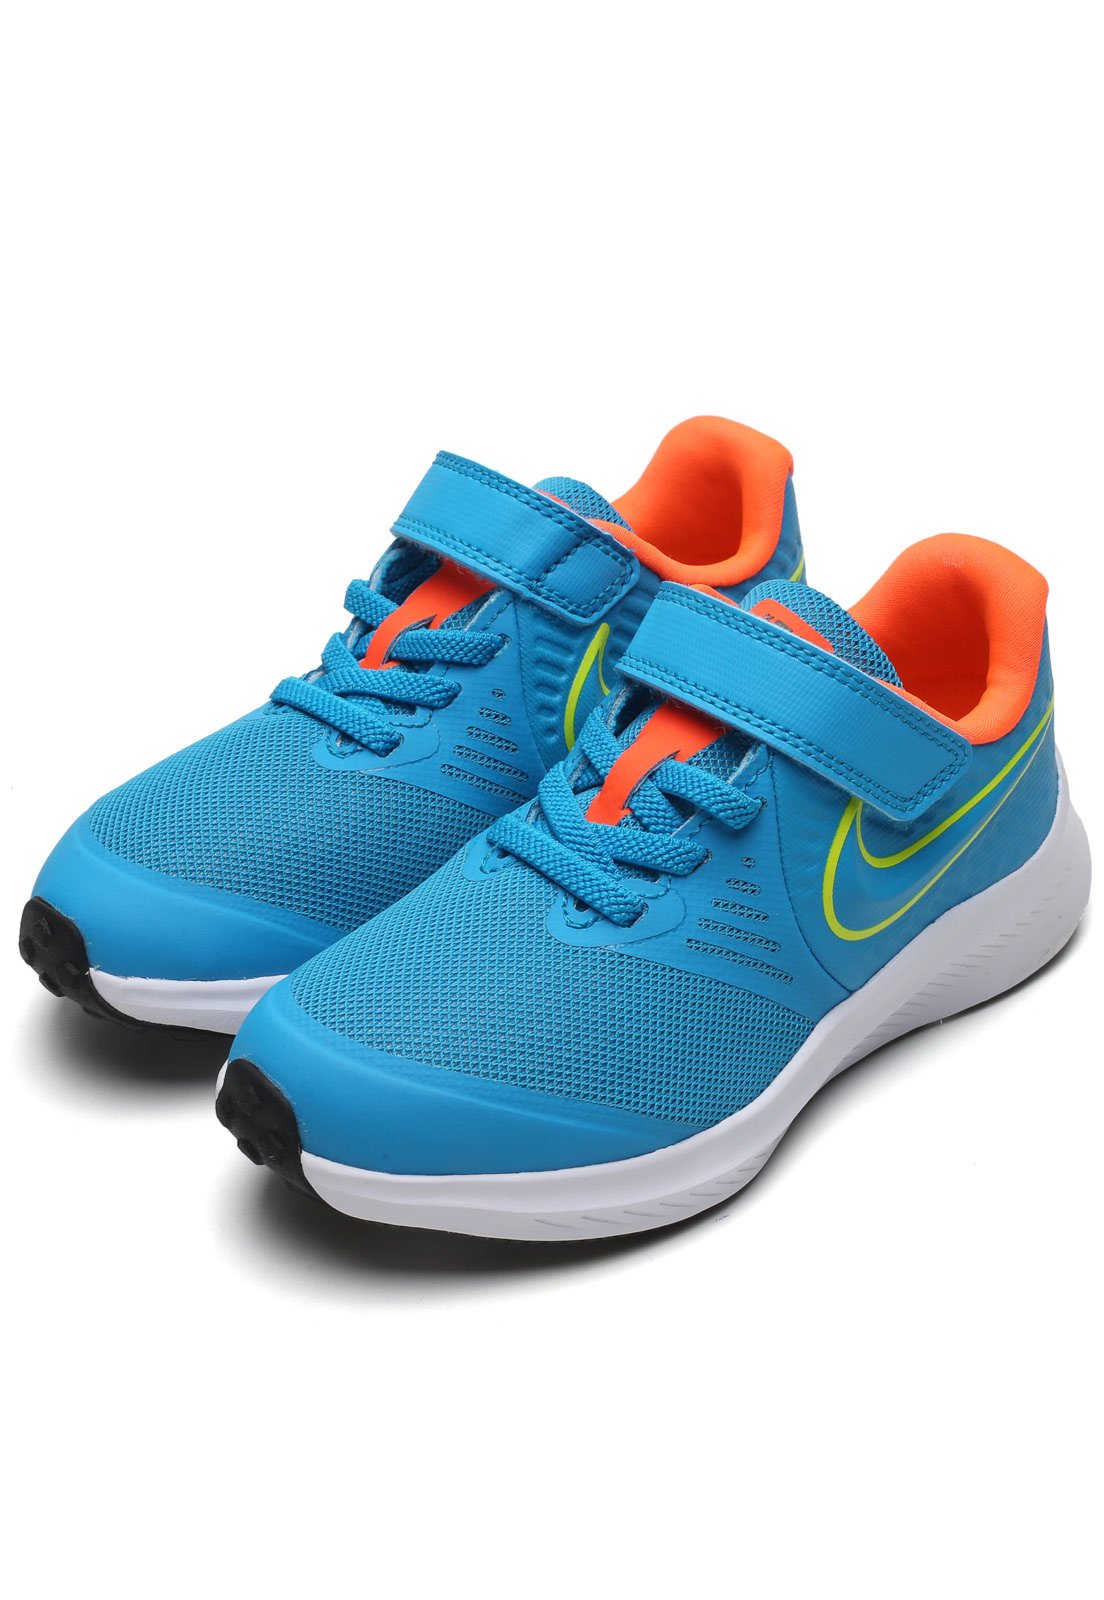 Tênis Nike Infantil Star Runner 2 Azul - Compre Agora | Tricae